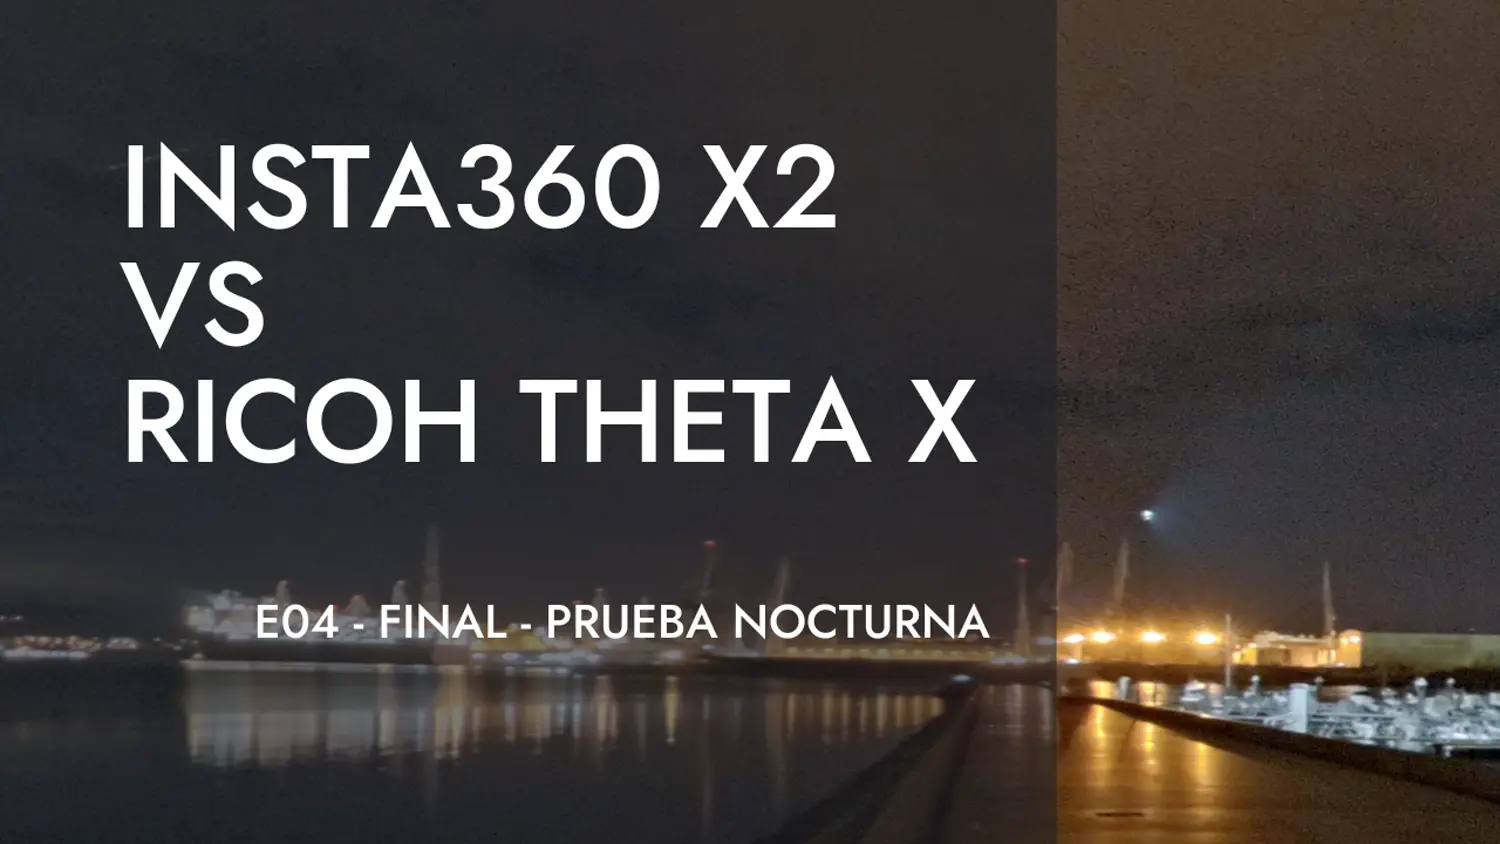 Insta360-X2 vs Ricoh Theta X - E04 - Prueba nocturna